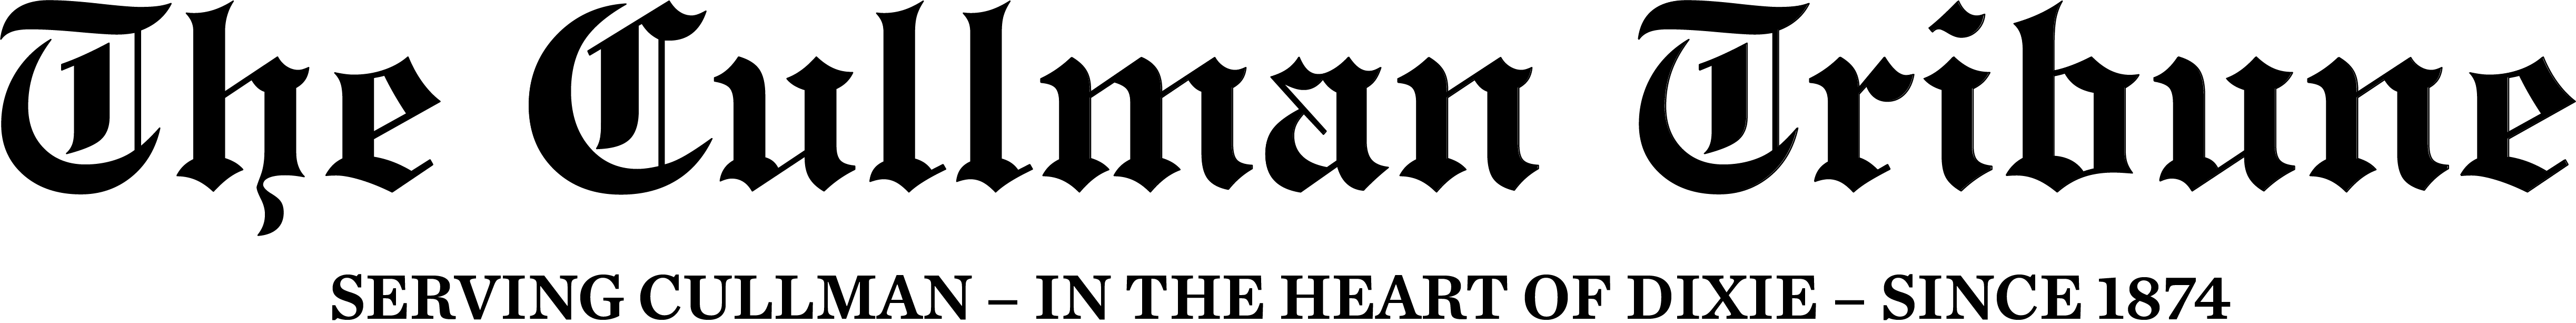 The Cullman Tribune Logo